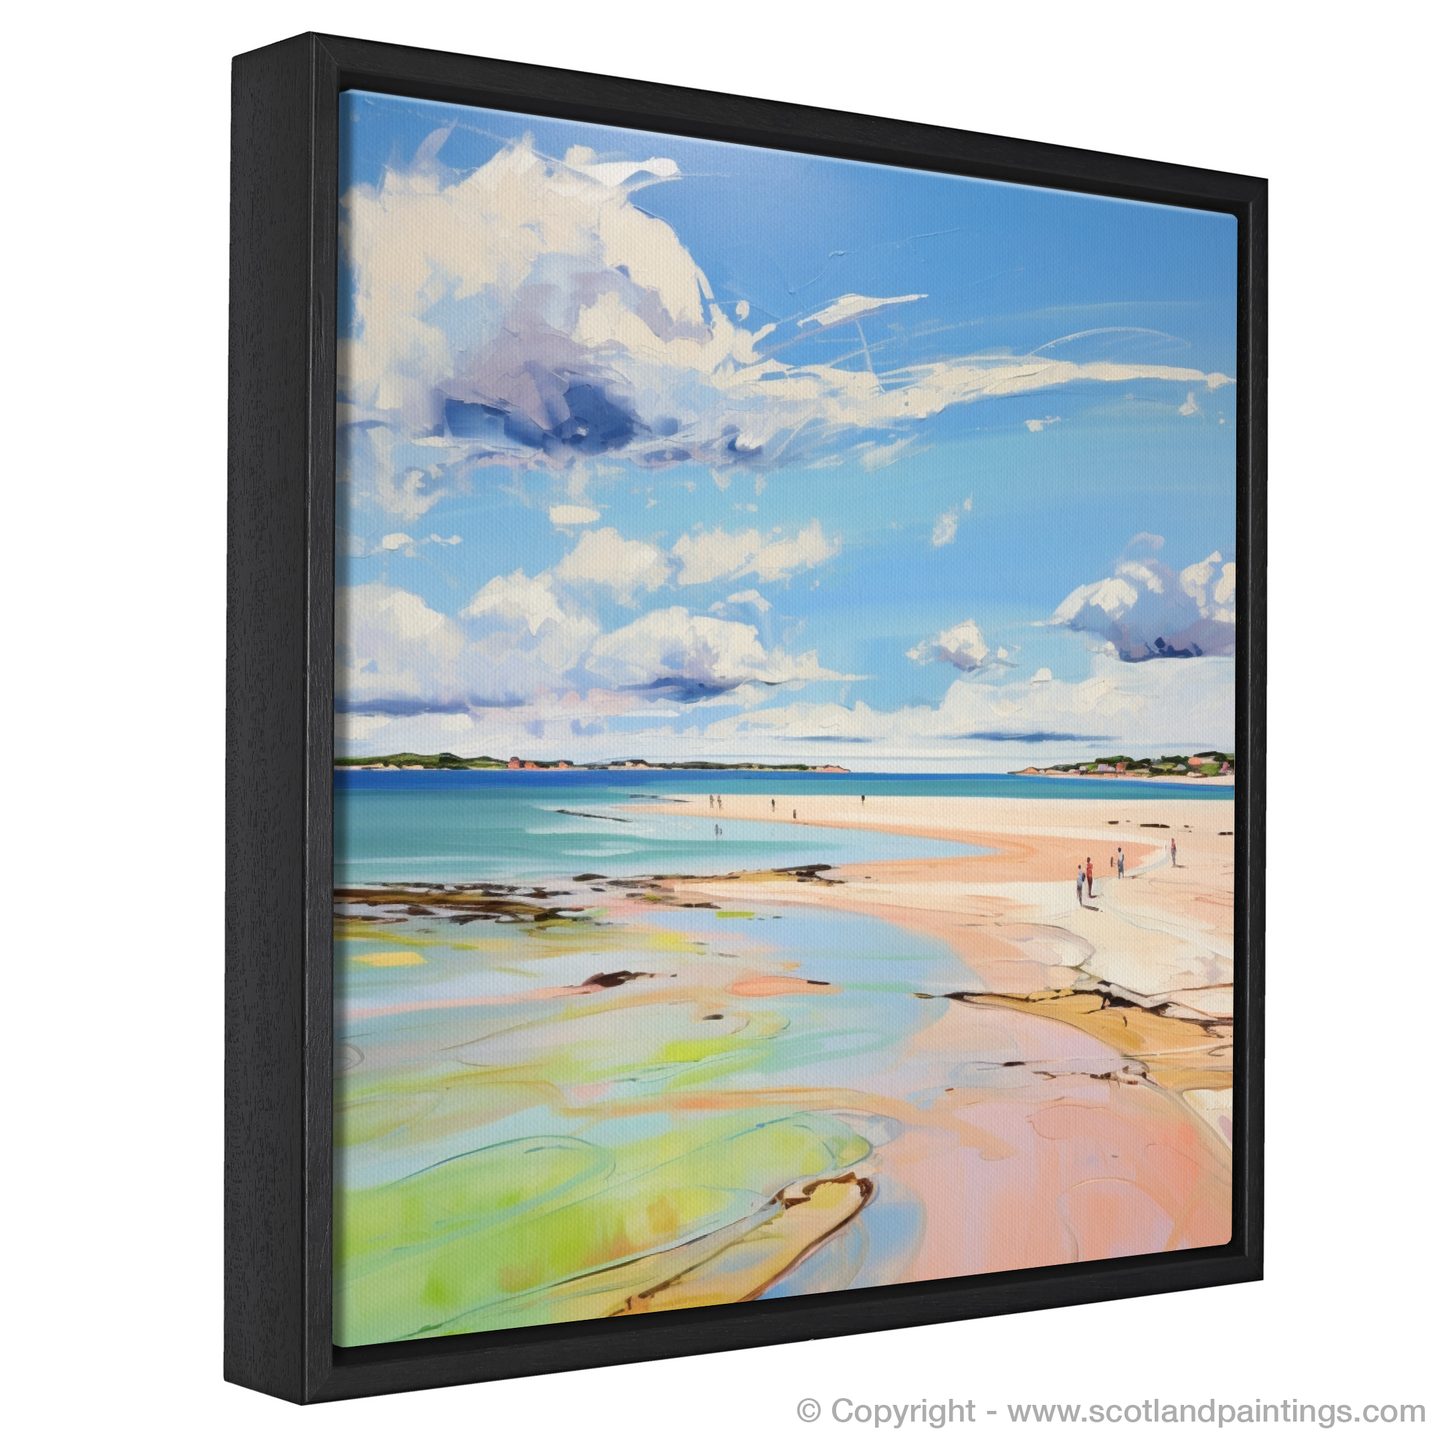 Painting and Art Print of Longniddry Beach, East Lothian in summer entitled "Summer Serenity at Longniddry Beach".